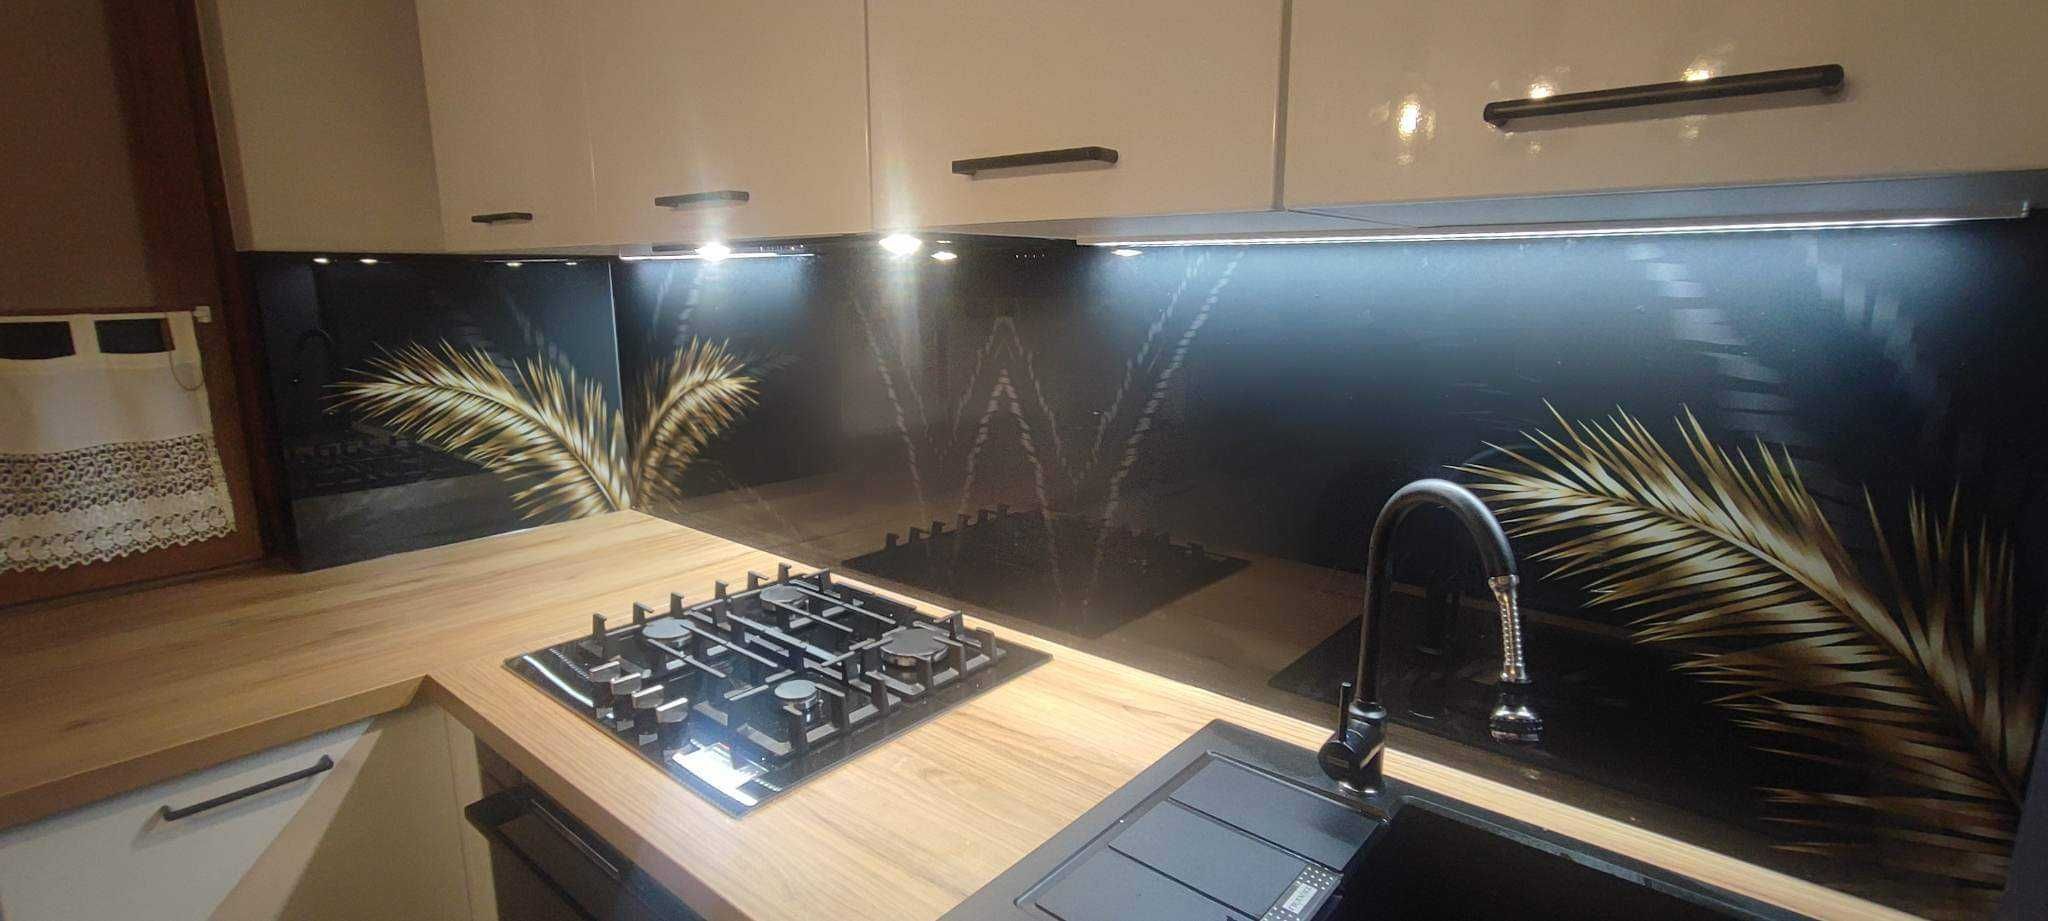 Panel kuchenny szklany do kuchni, grafika na szkle szkło hartowane